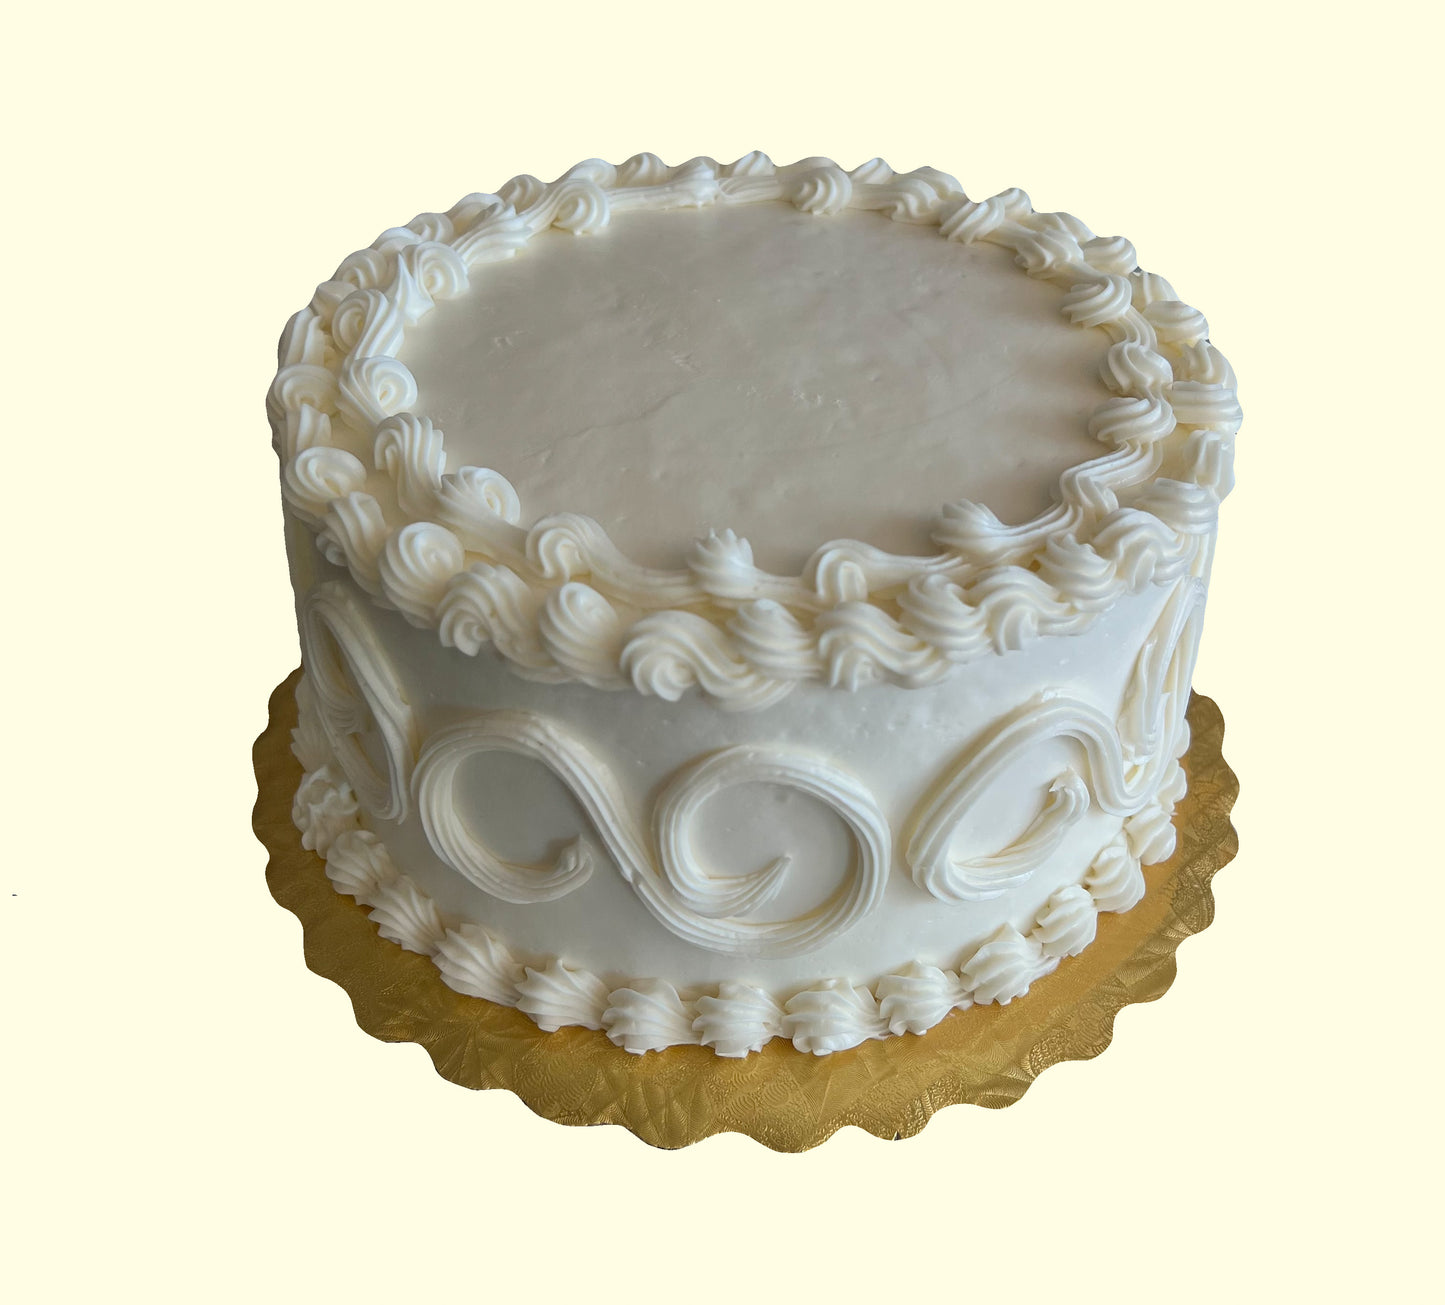 Vanilla/White Cake